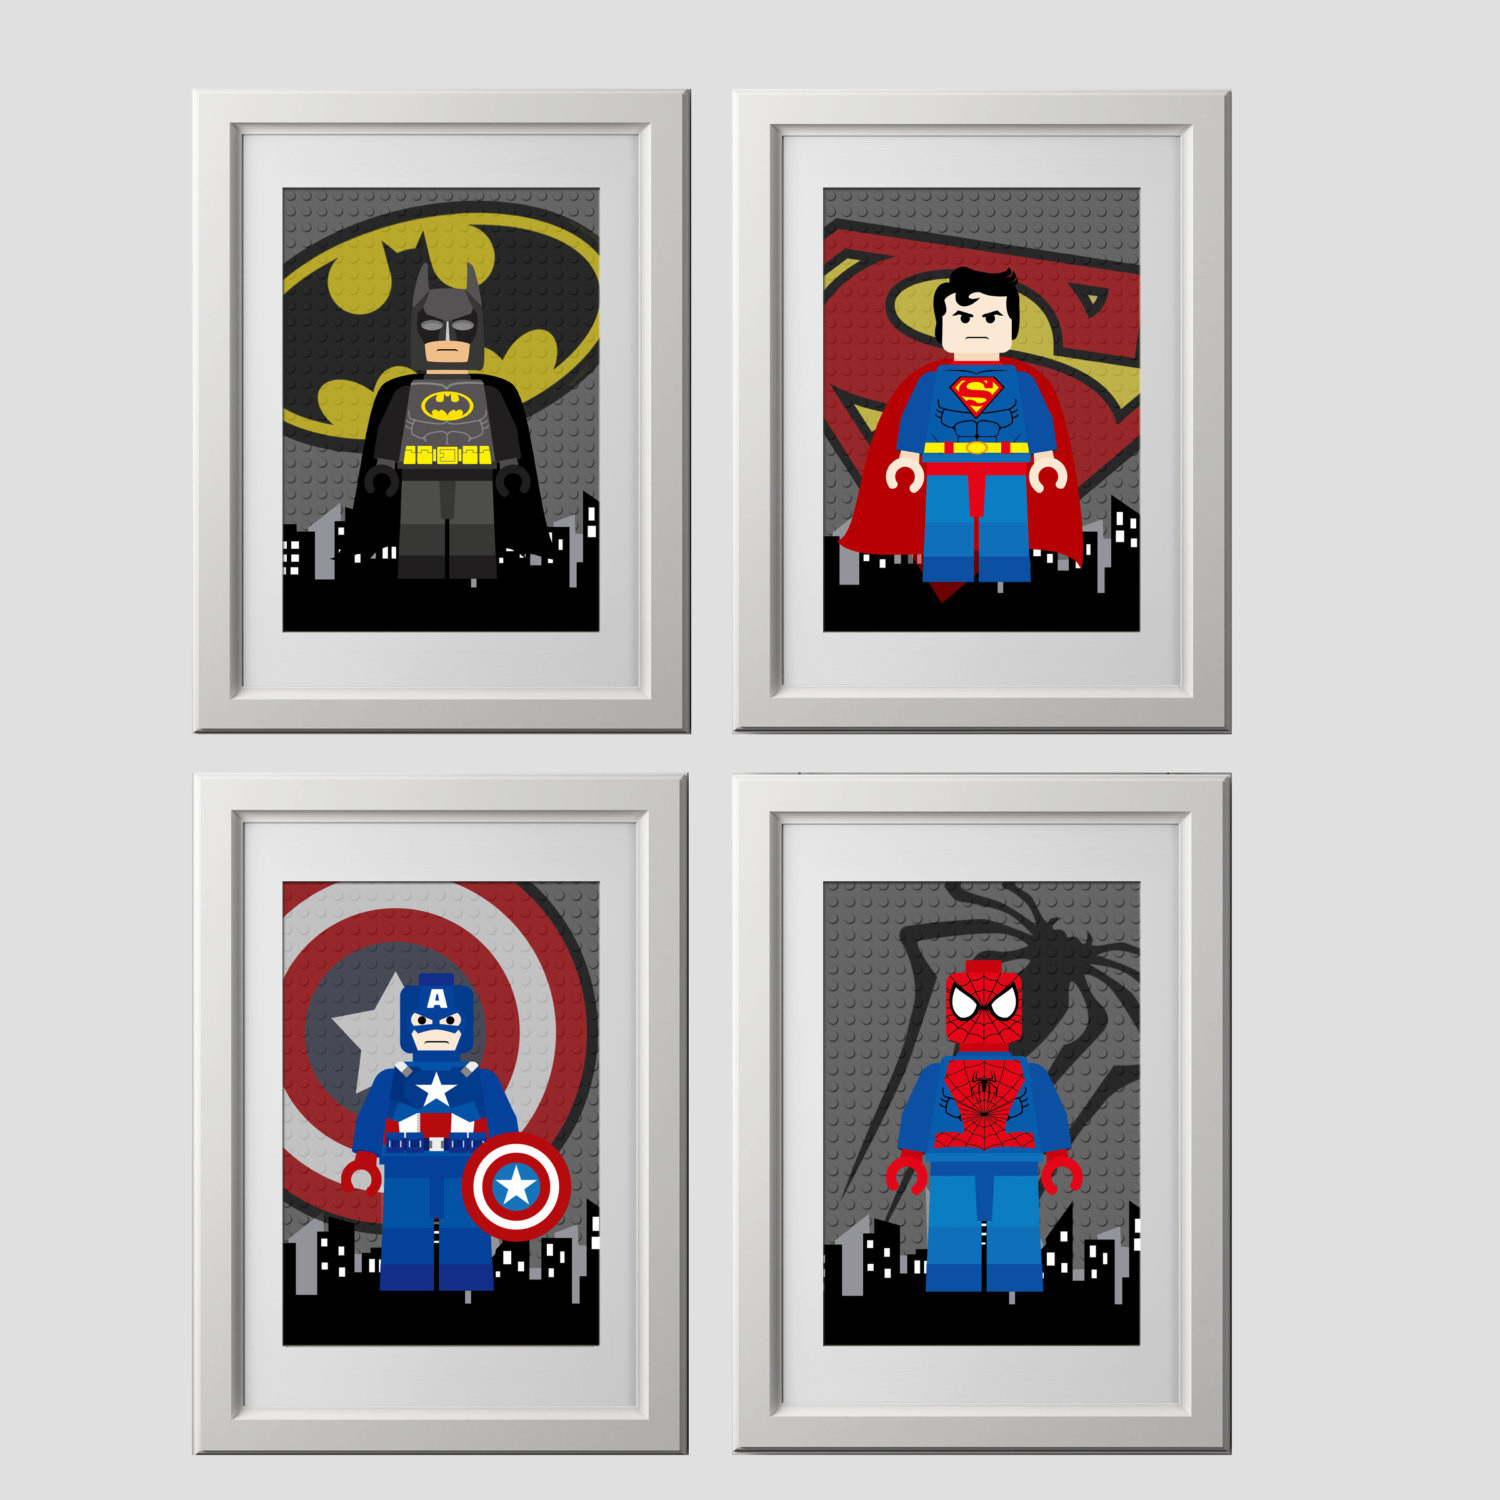 Best ideas about Superhero Wall Art
. Save or Pin Lego superhero wall art prints batman by AmysDesignShoppe Now.